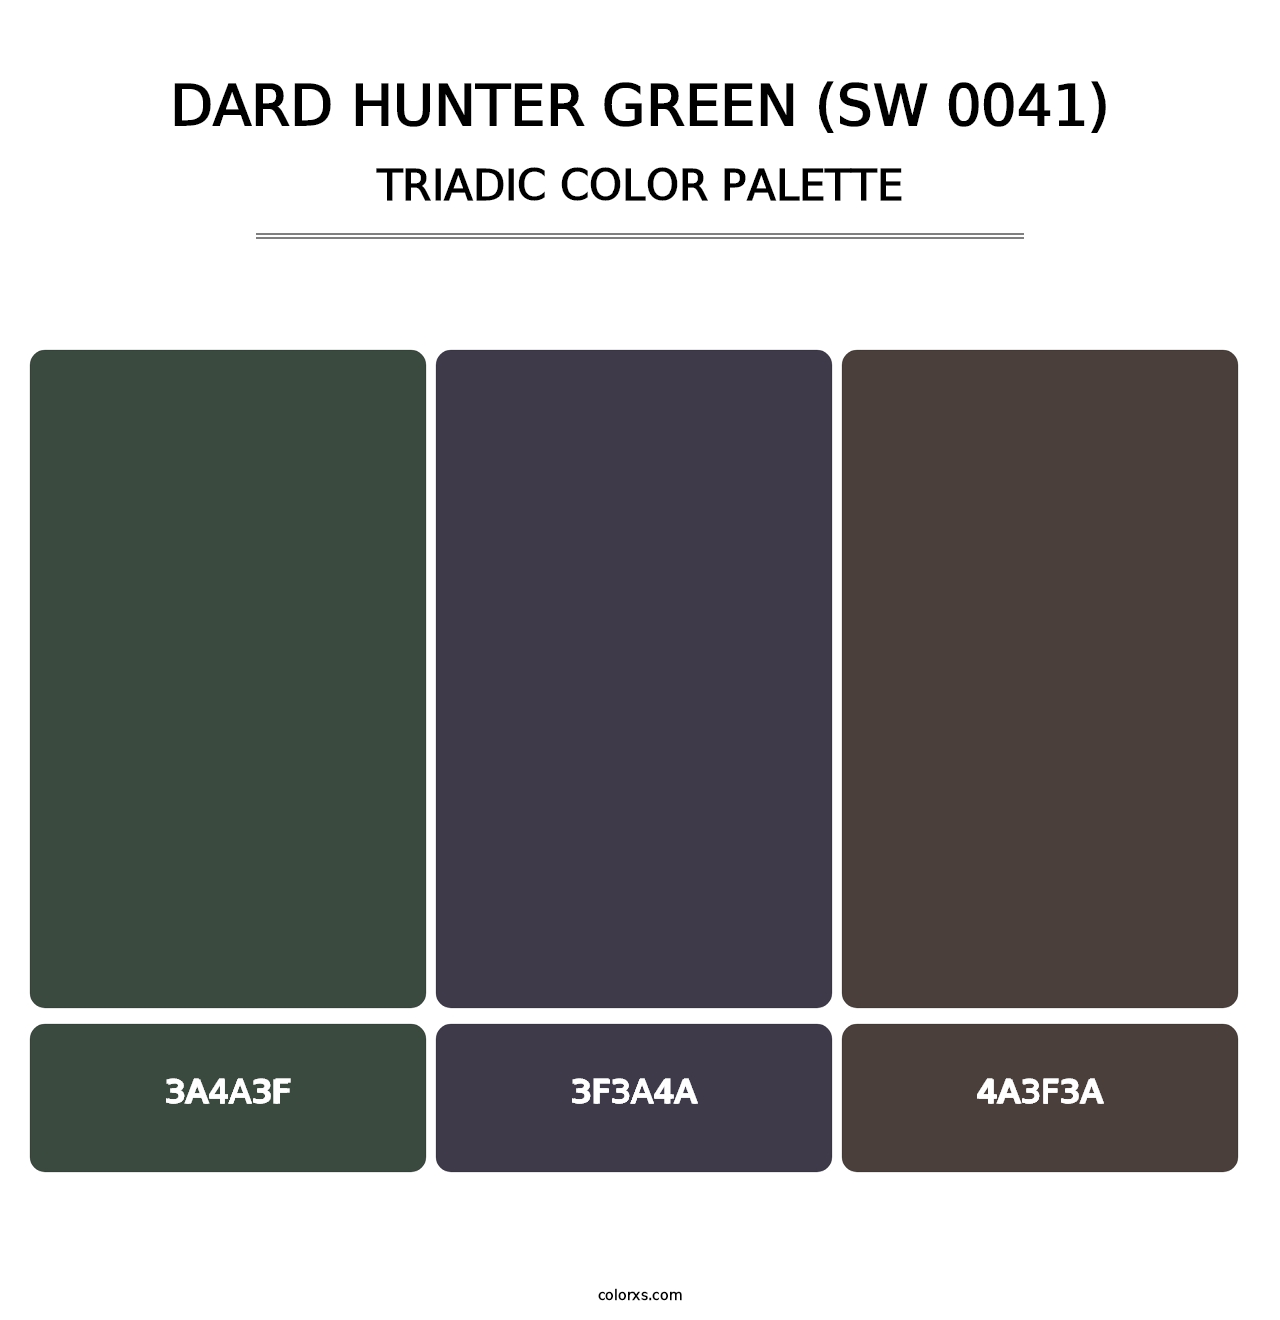 Dard Hunter Green (SW 0041) - Triadic Color Palette